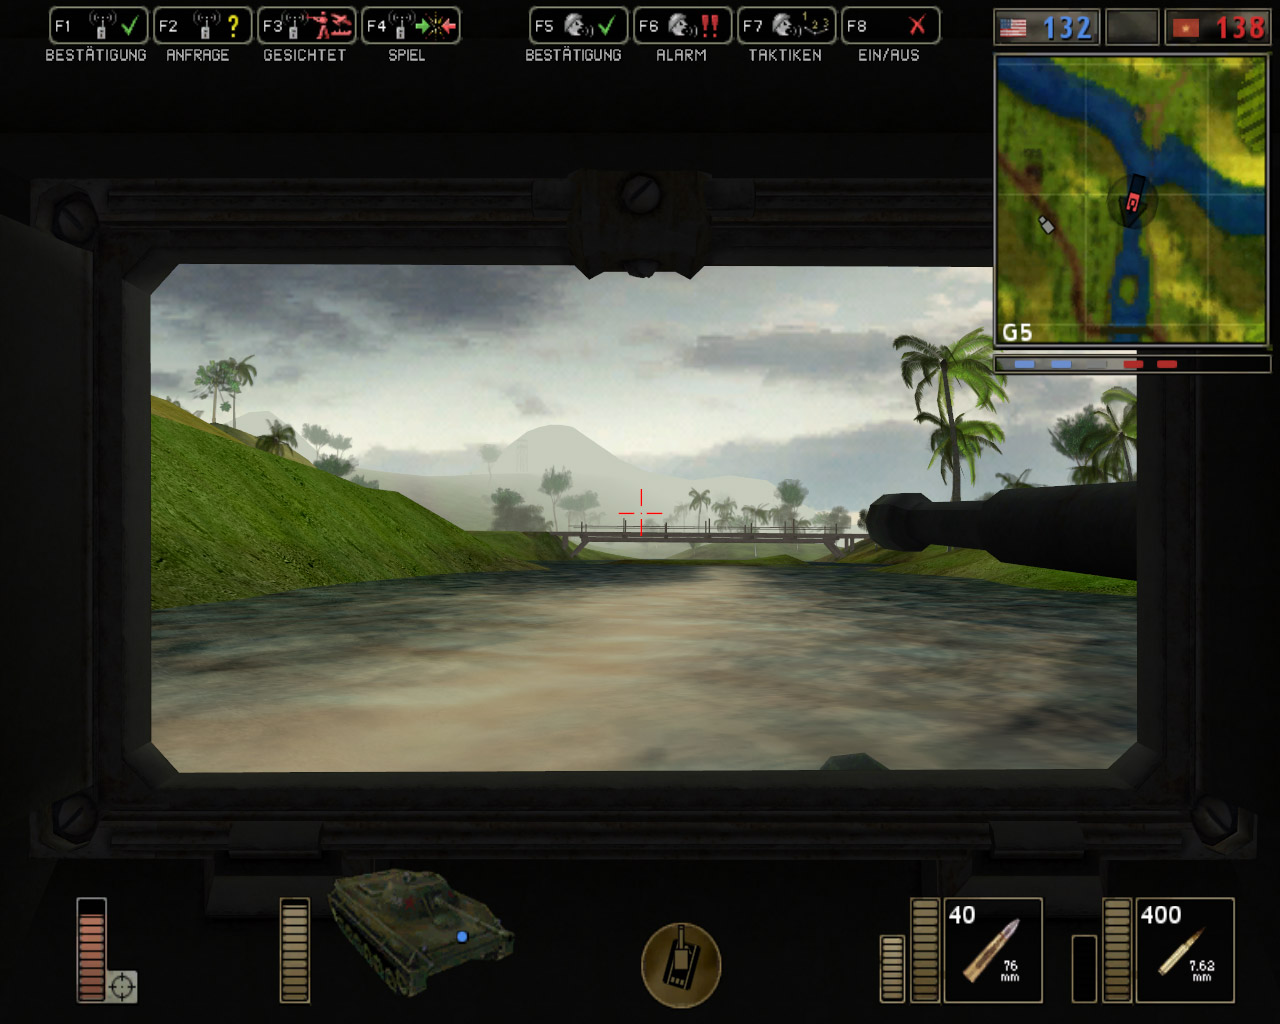 Battle at Quang Tri